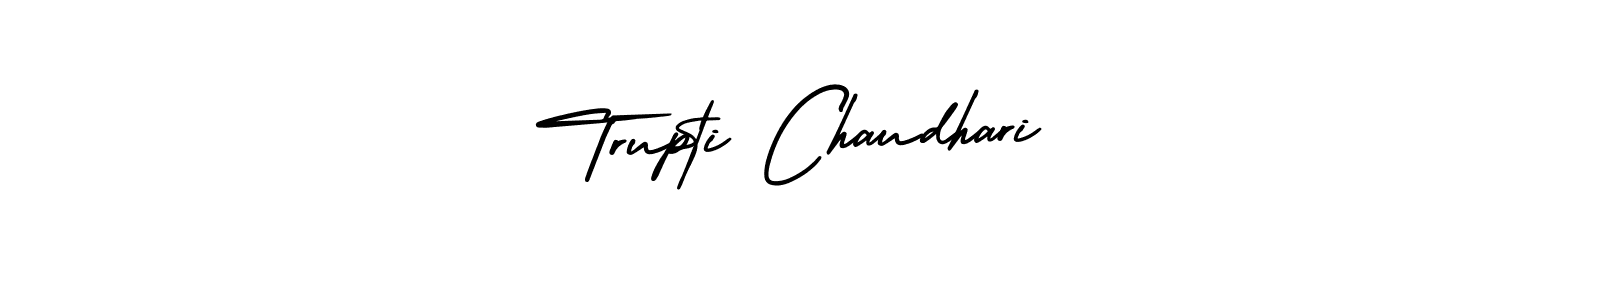 Design your own signature with our free online signature maker. With this signature software, you can create a handwritten (AmerikaSignatureDemo-Regular) signature for name Trupti Chaudhari. Trupti Chaudhari signature style 3 images and pictures png